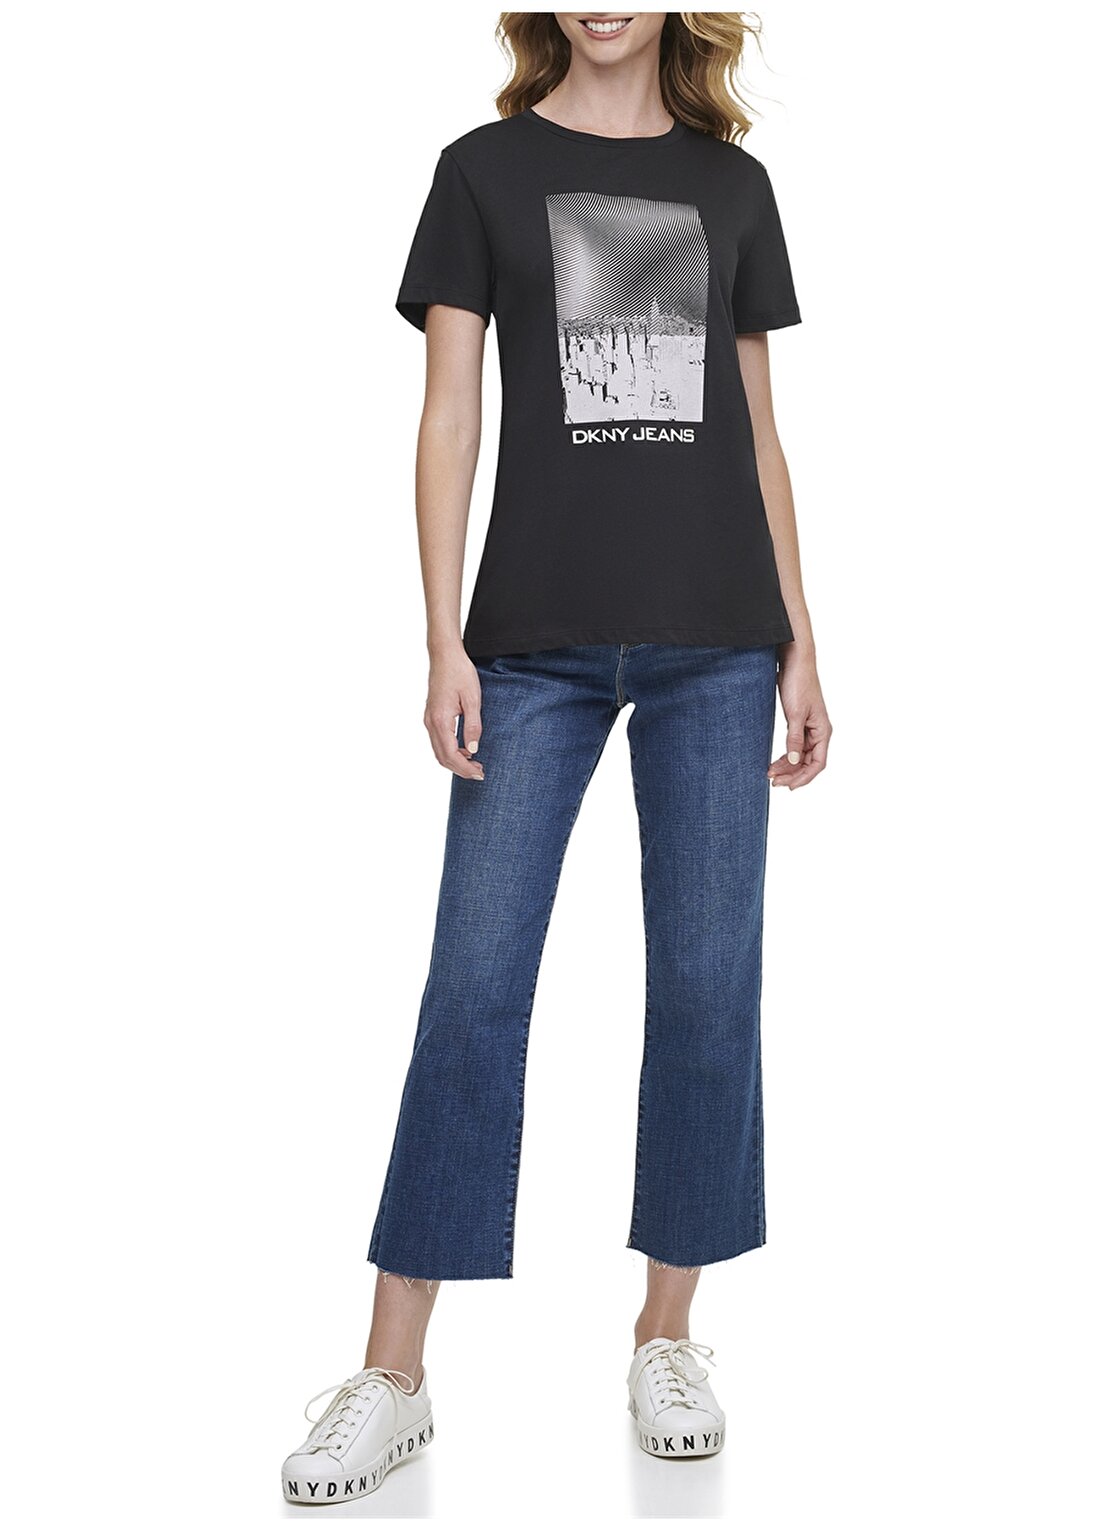 Dkny Jeans NYC Baskılı Logolu Kısa Kollu T-Shirt